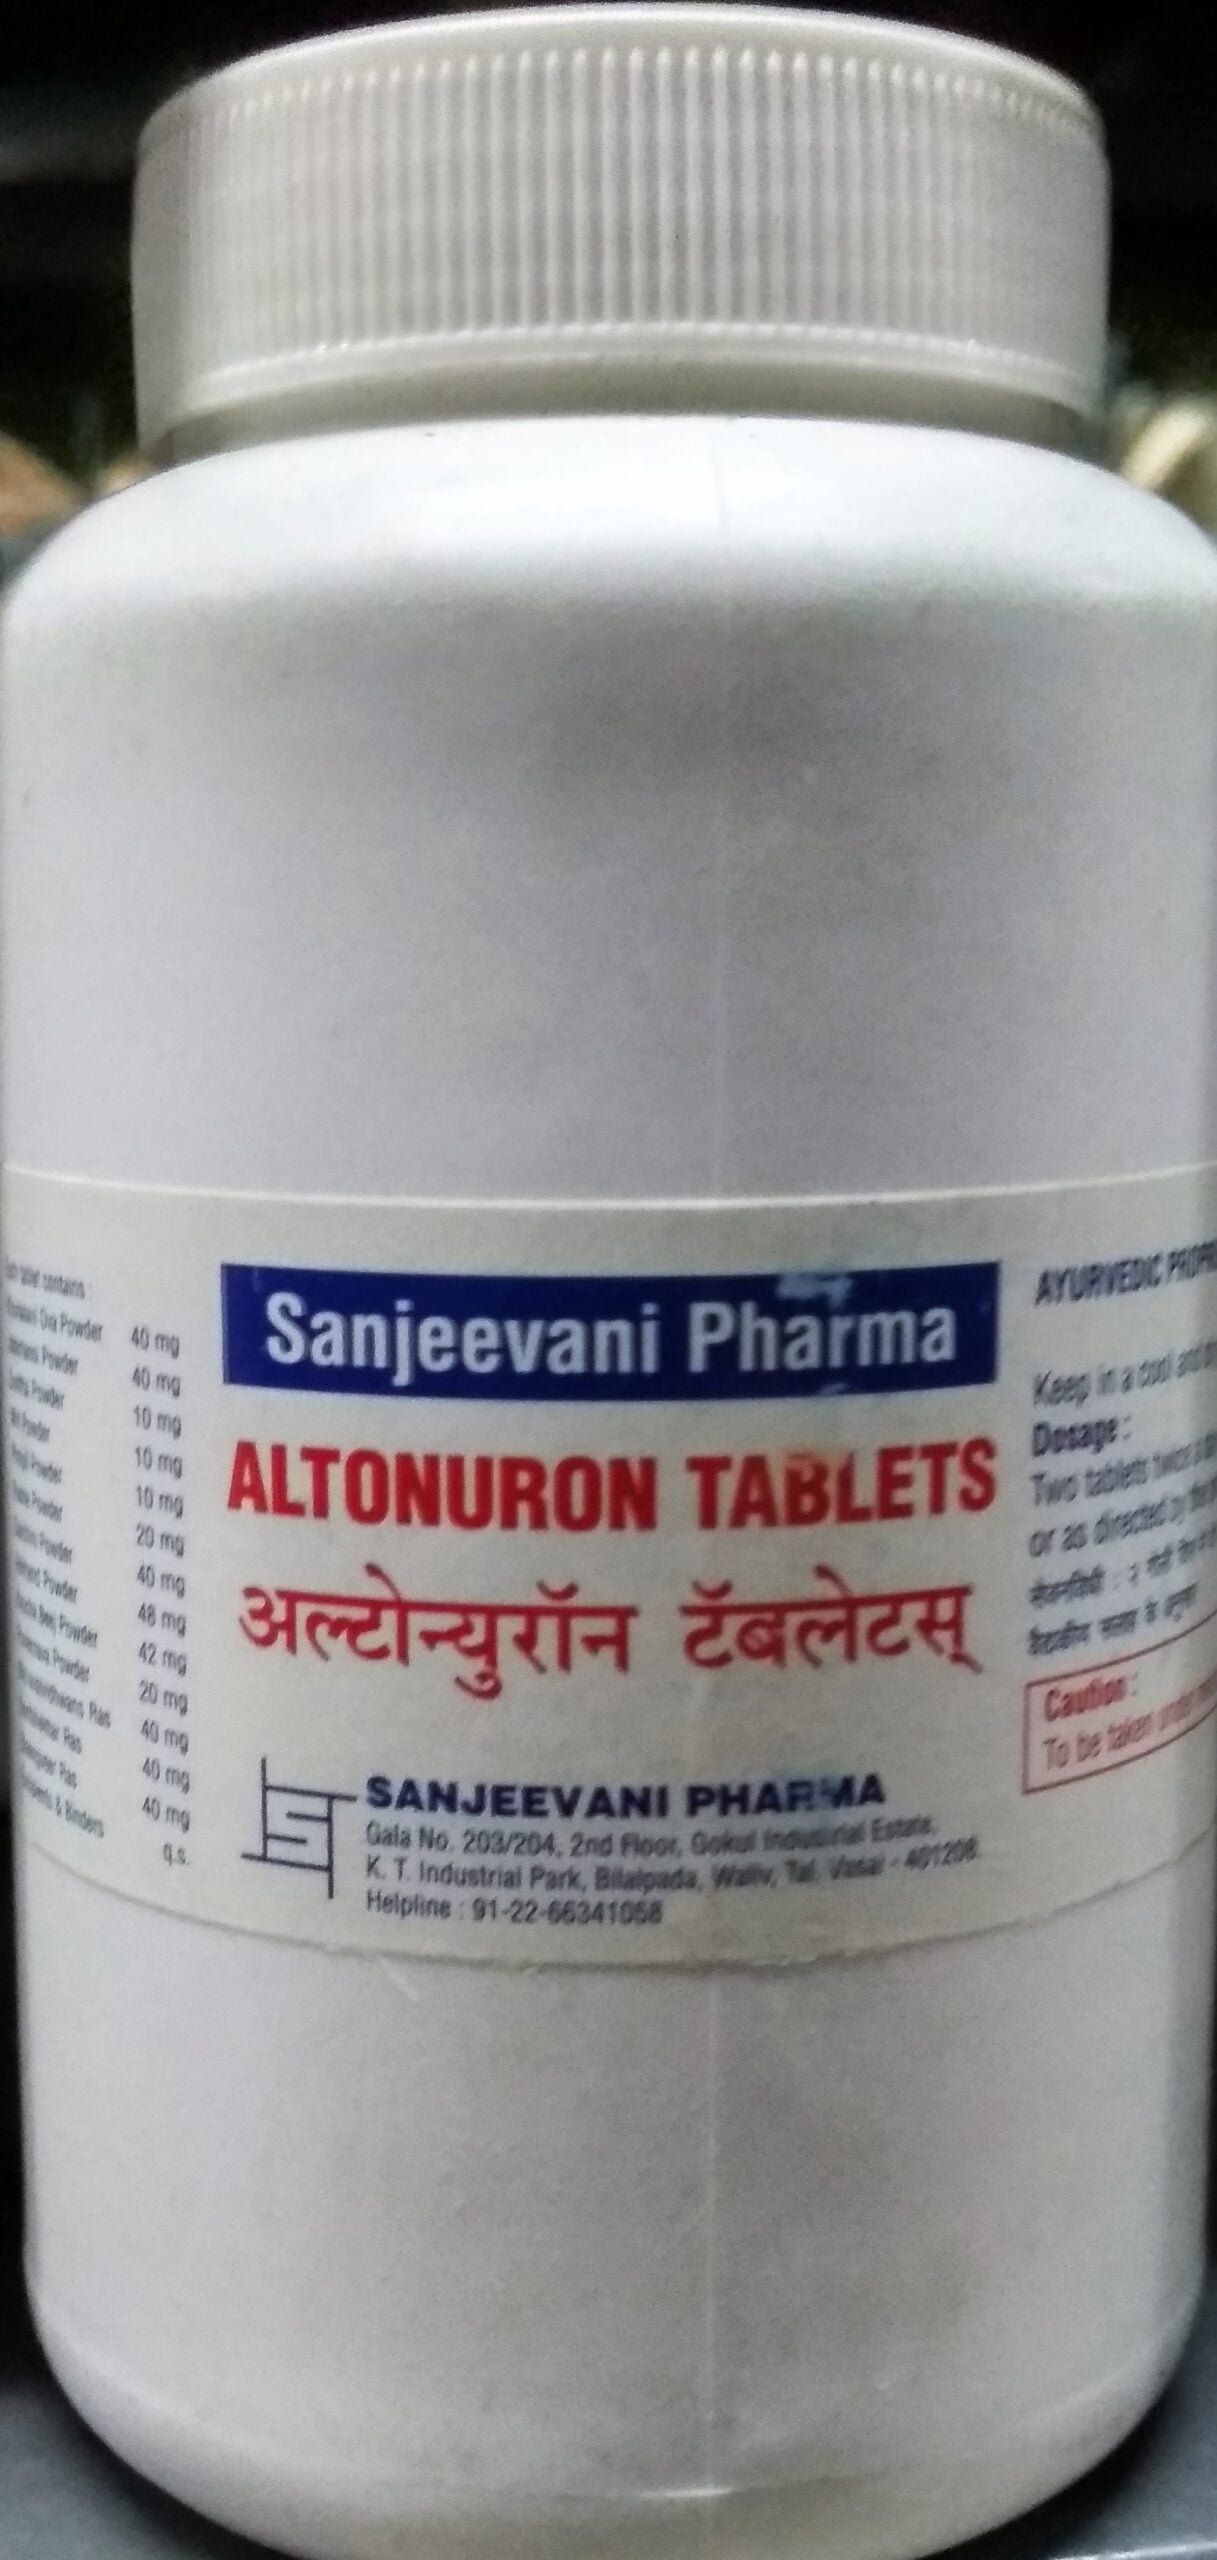 altonuron 60tab upto 20% off sanjeevani pharma mumbai